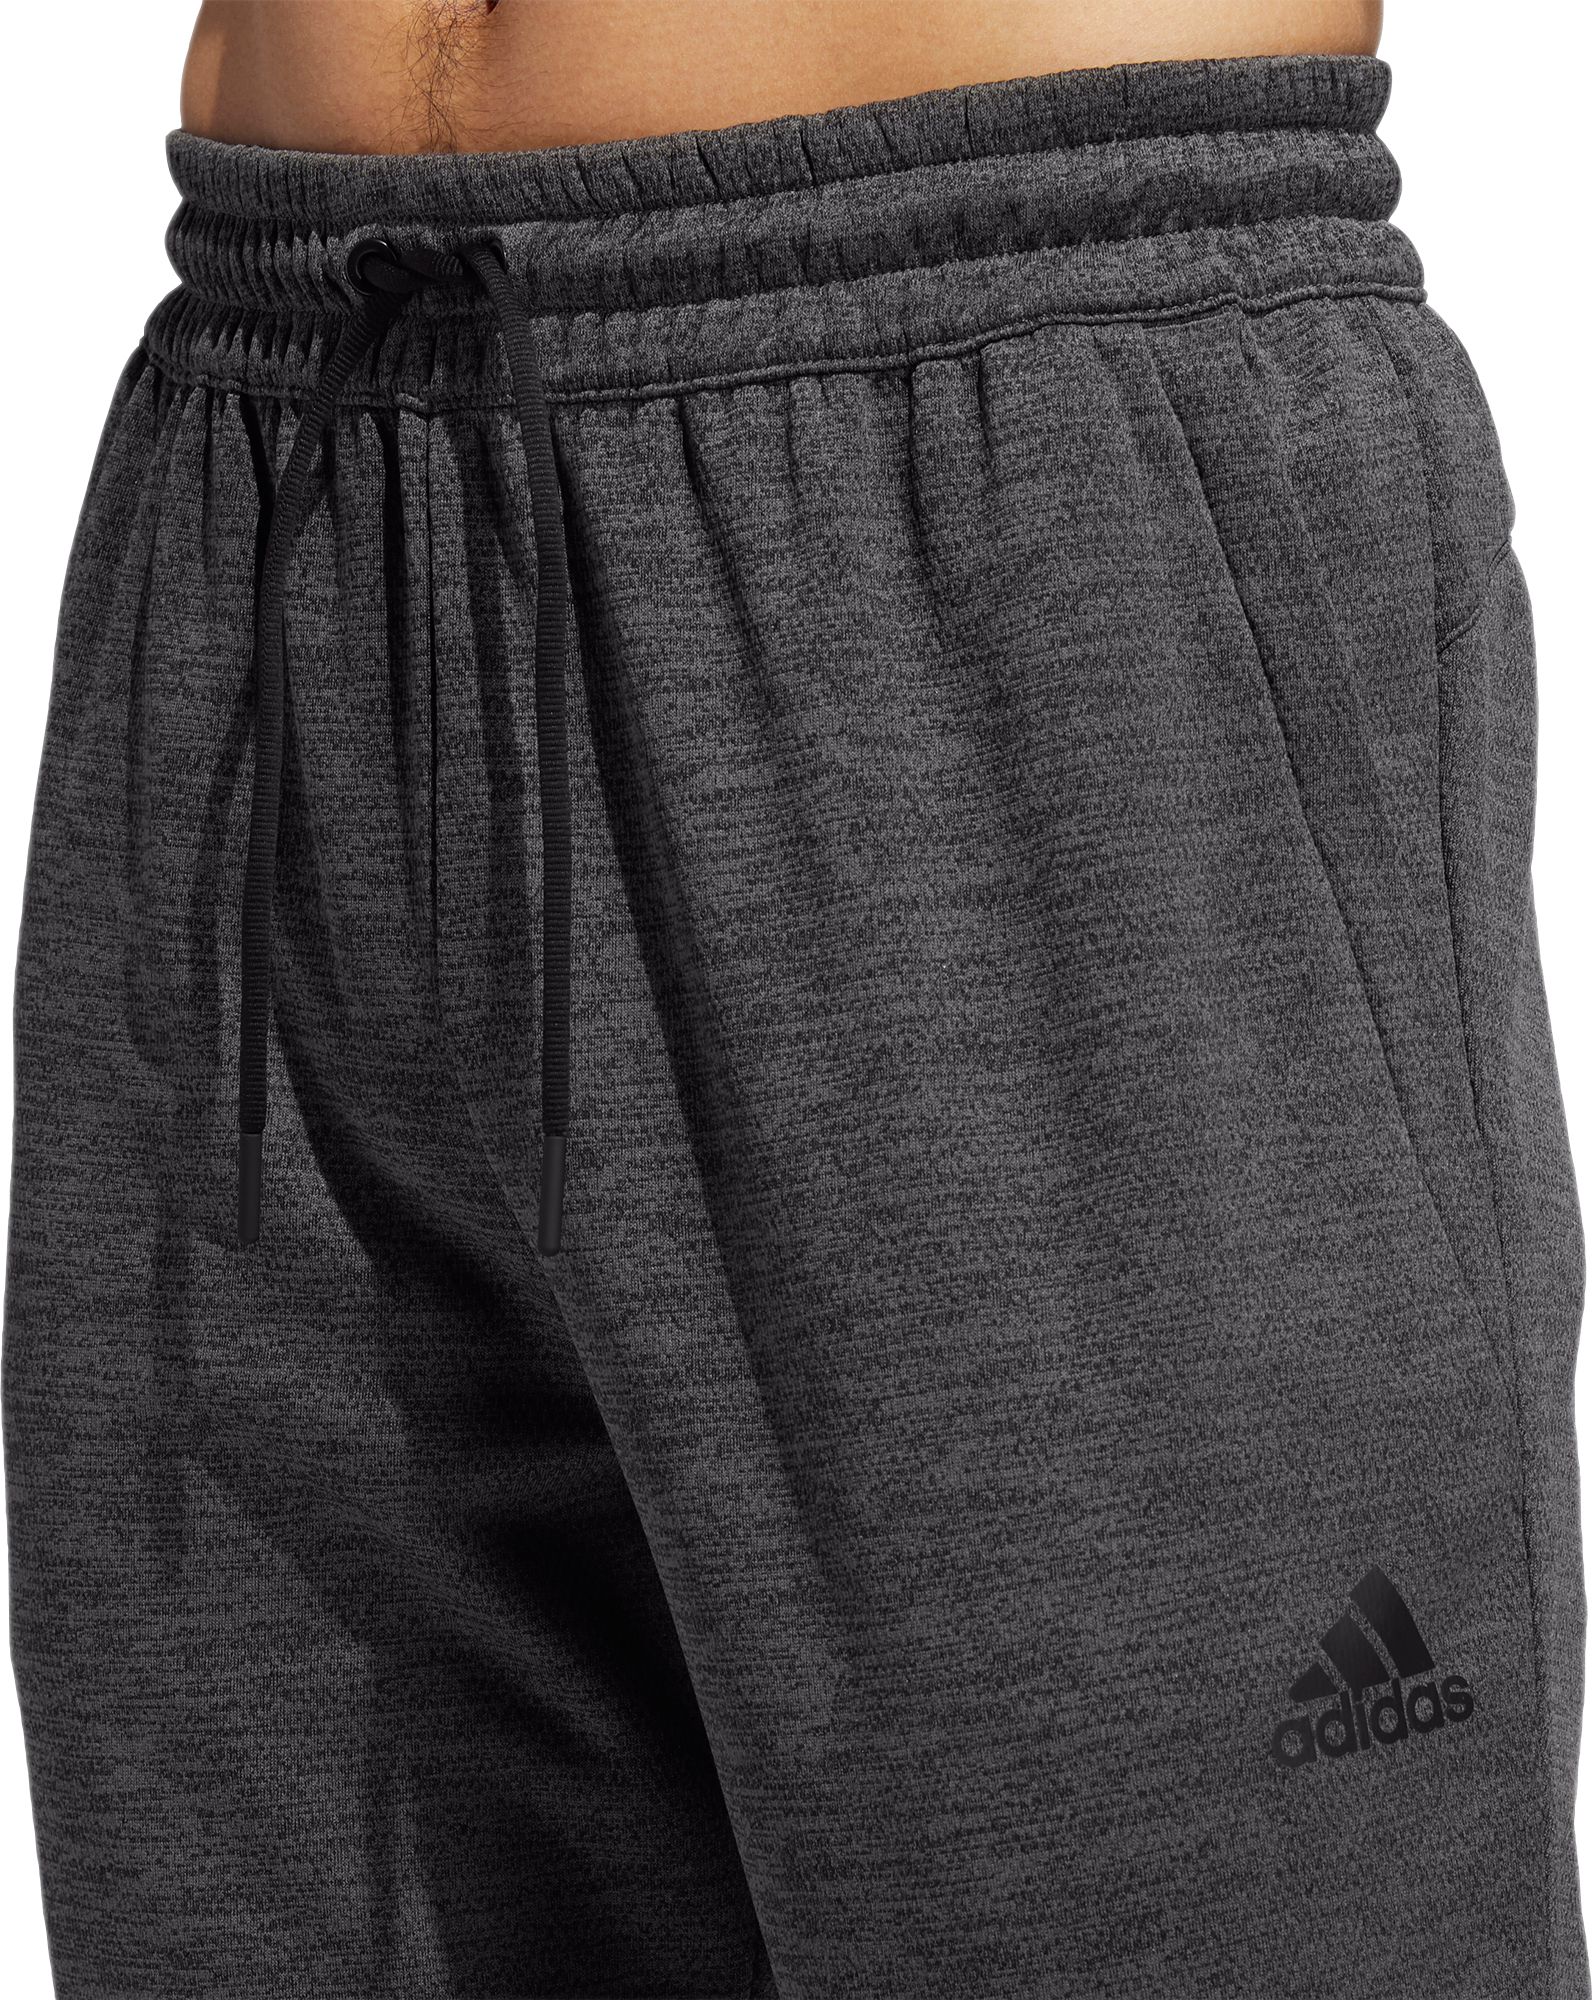 adidas men's team issue tapered fleece pants